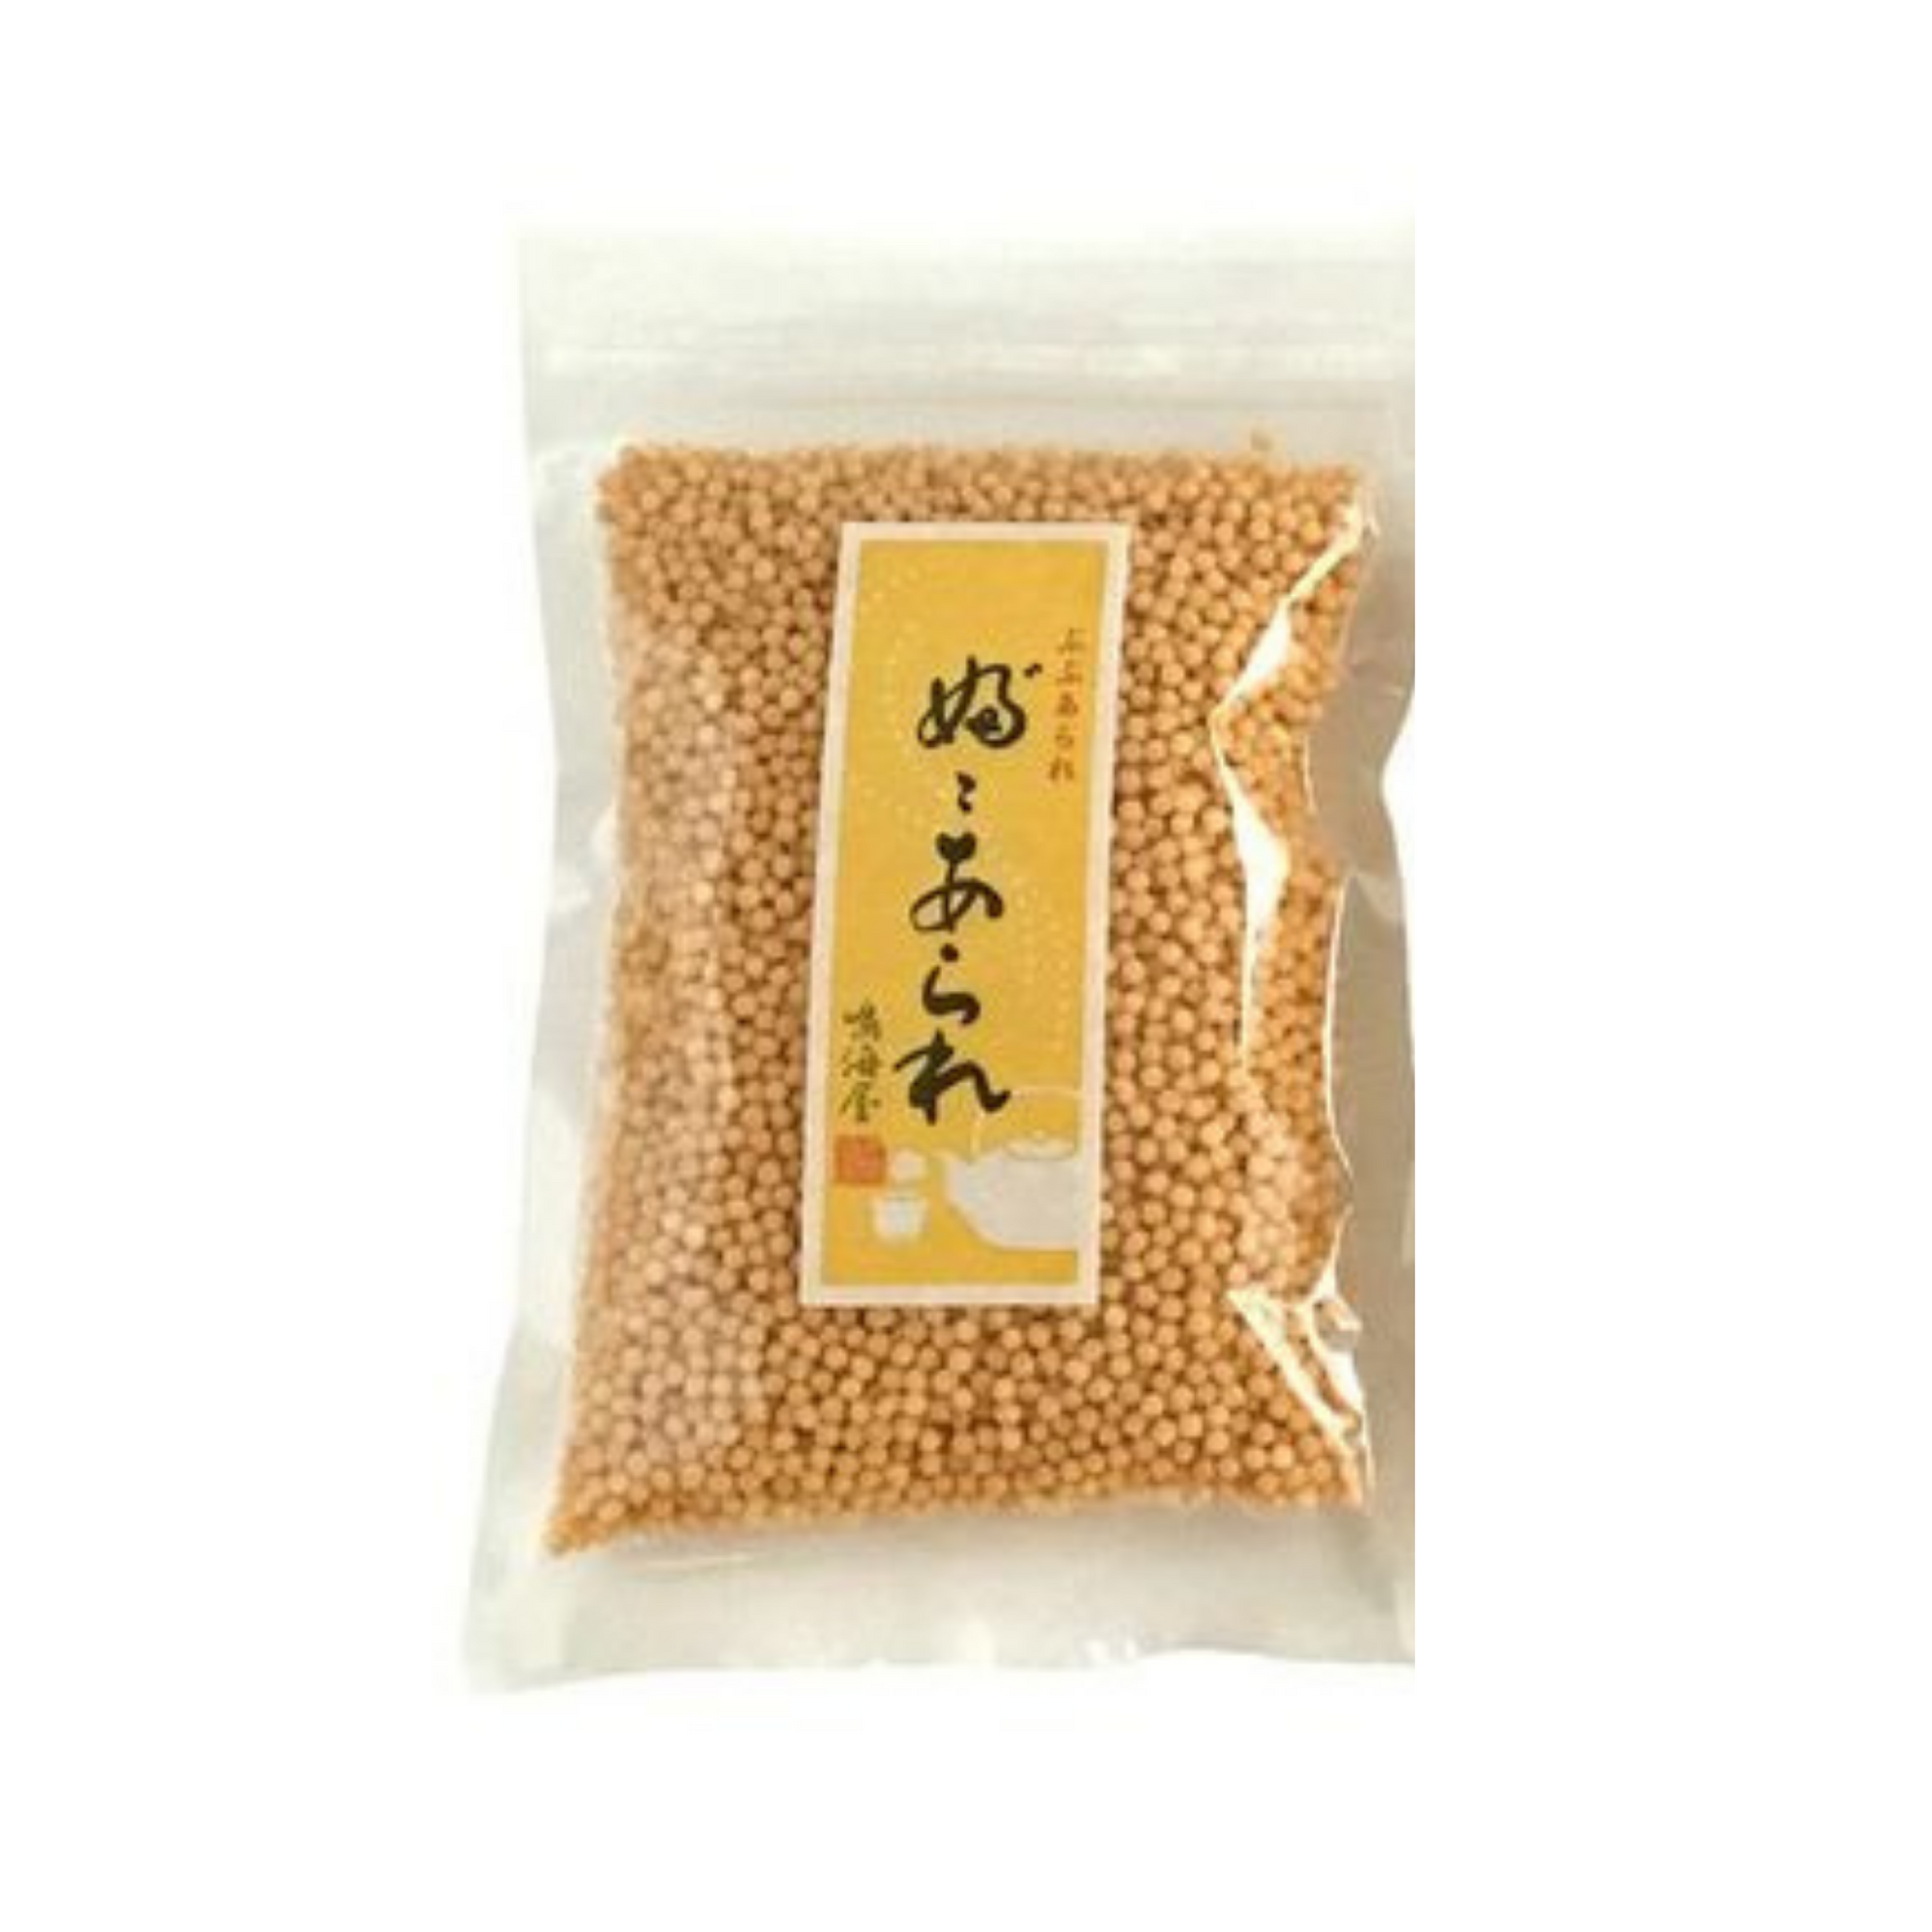 Rice Crackers - Bubu Arare - 300g